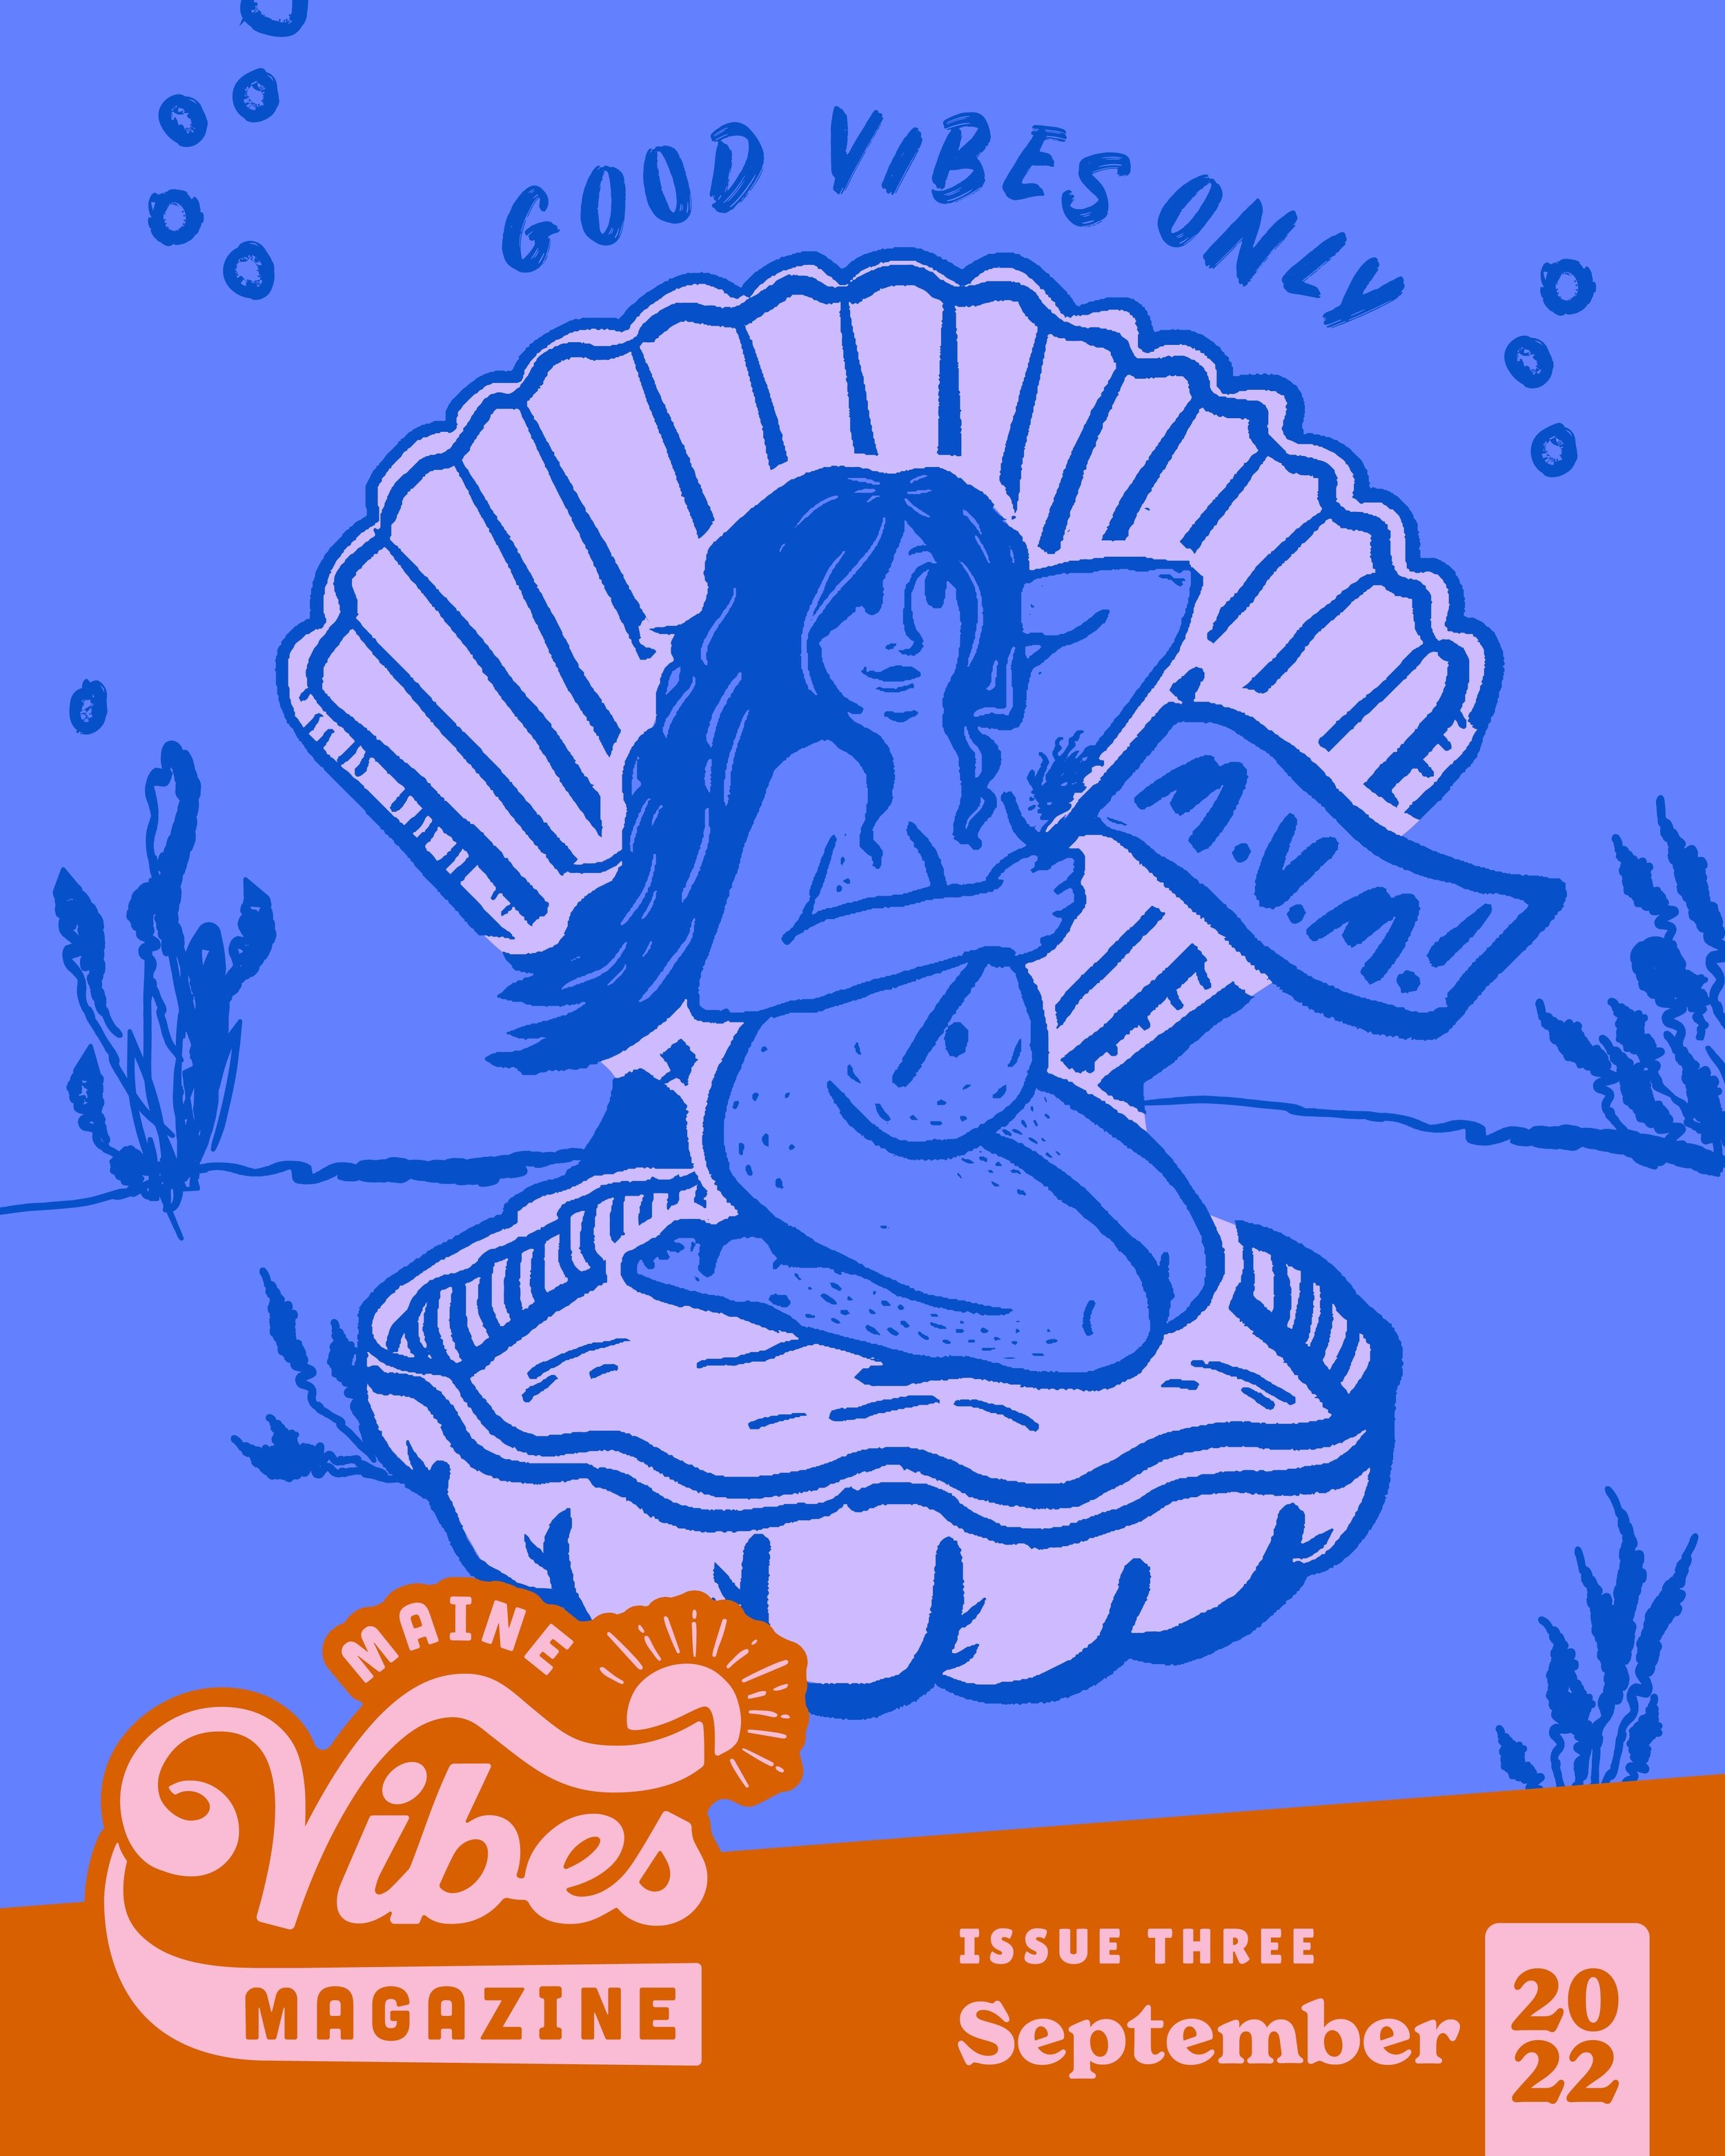 Maine Vibes Magazine Issue 3, September 25, 2022